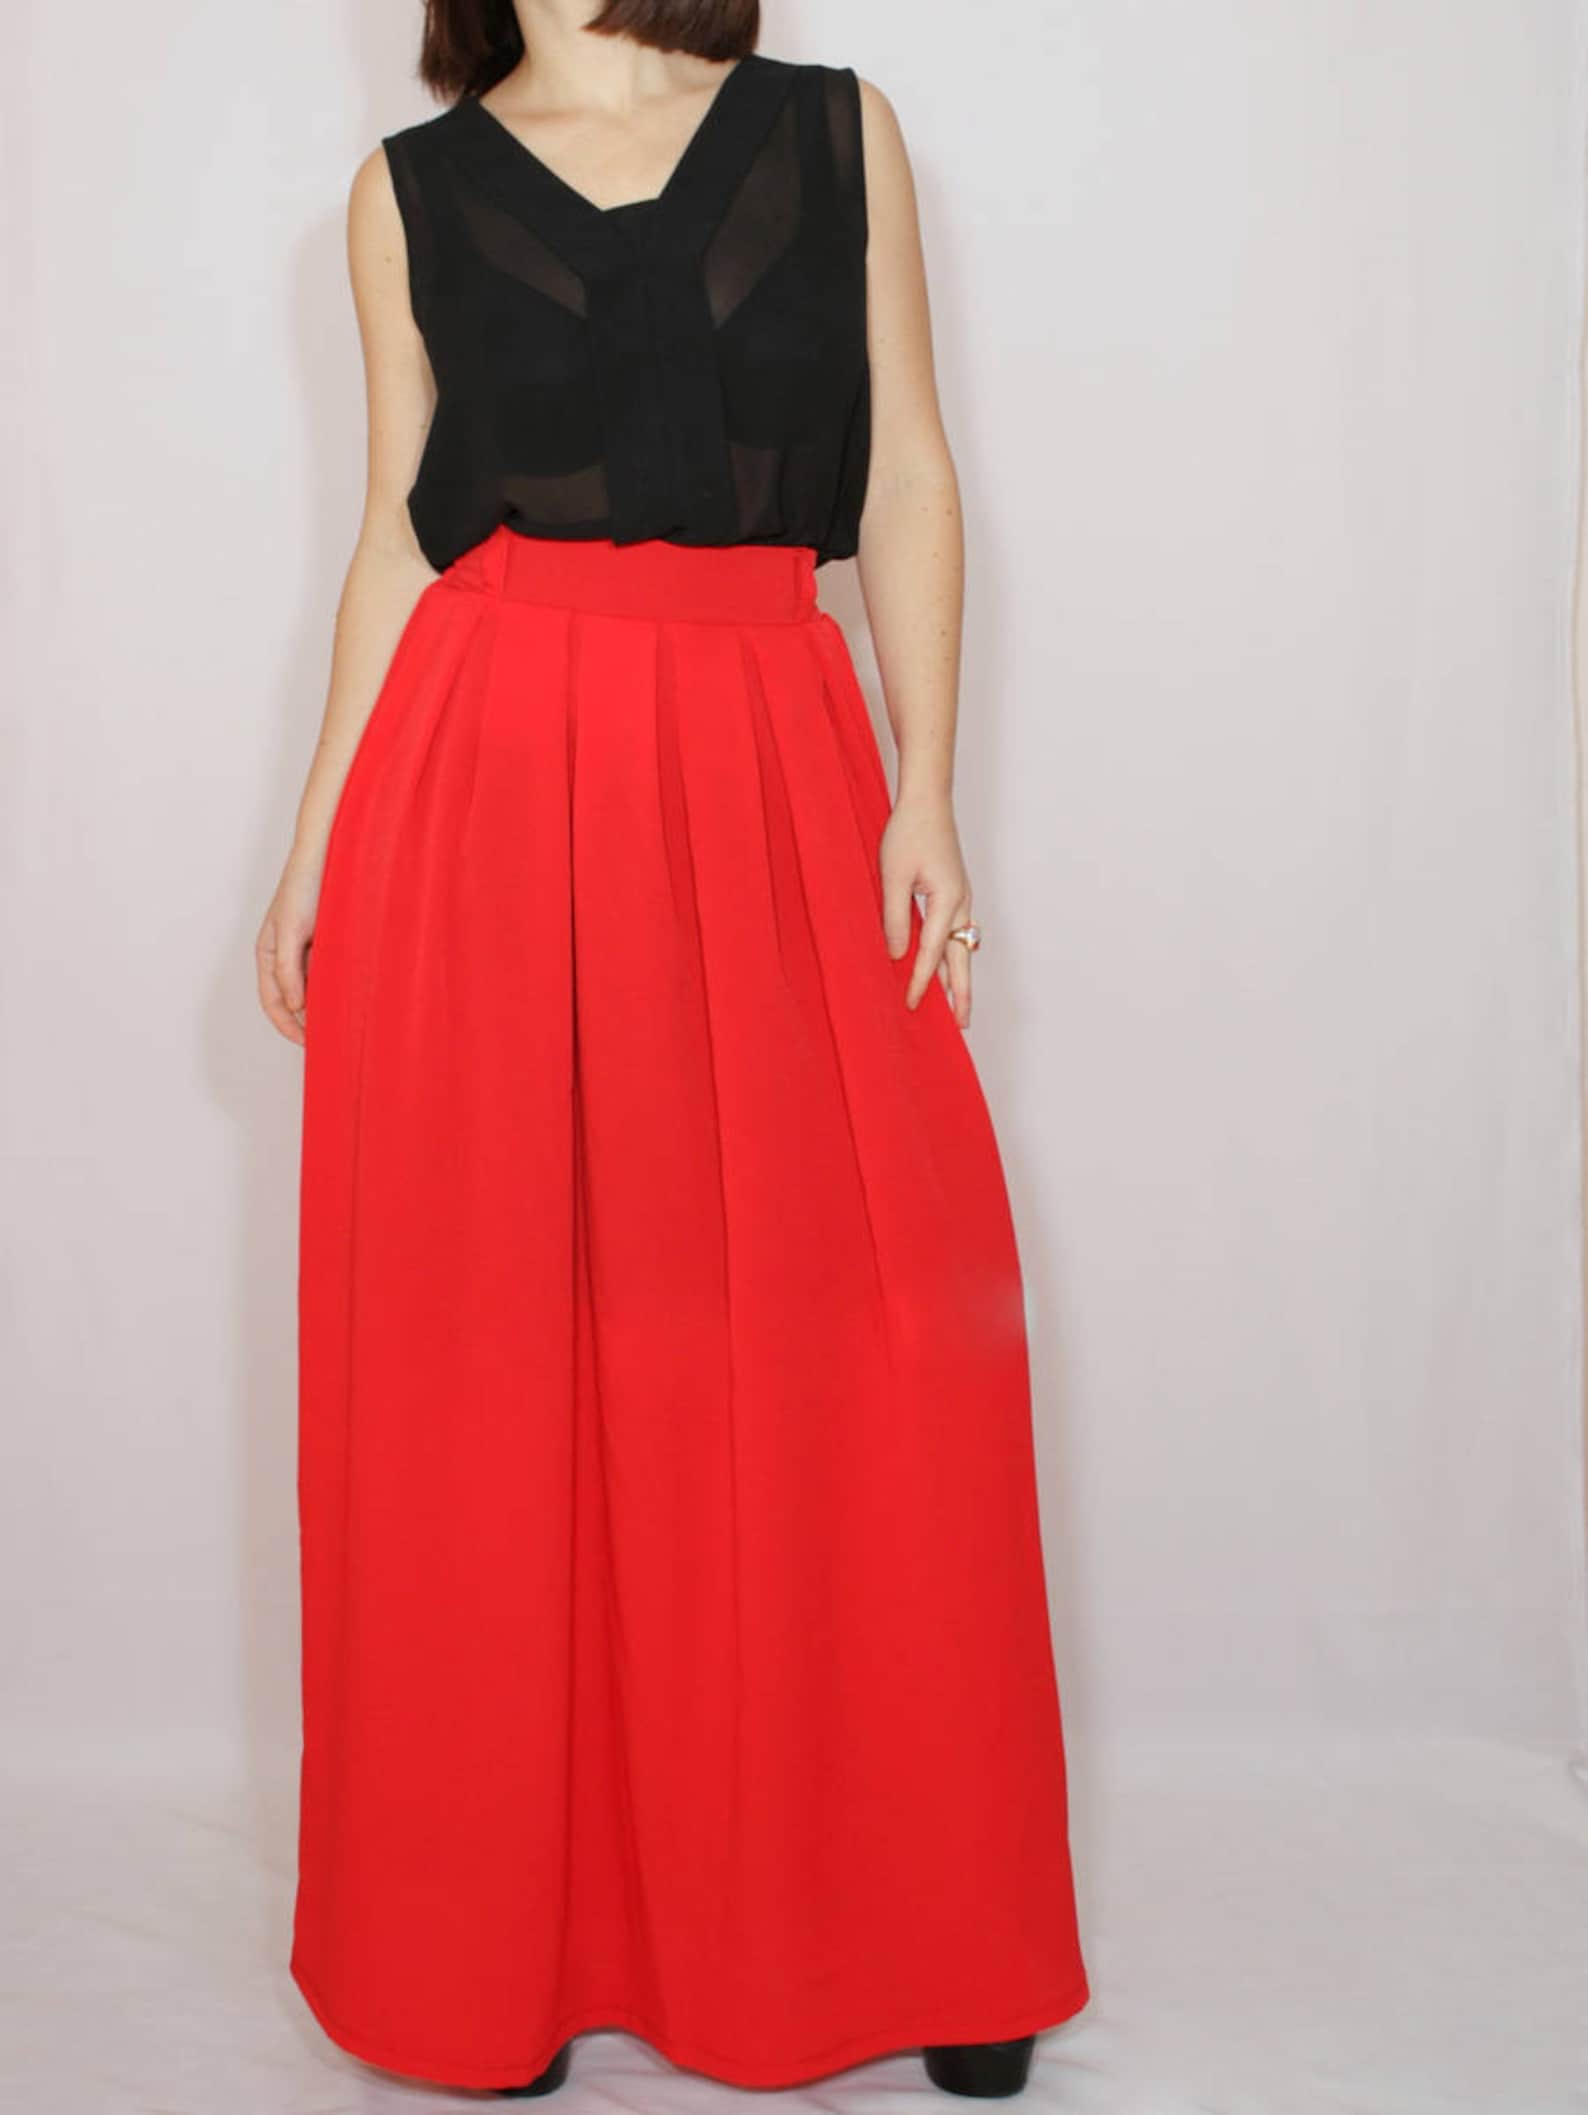 Long red chiffon skirt with pockets maxi skirt high waist | Etsy